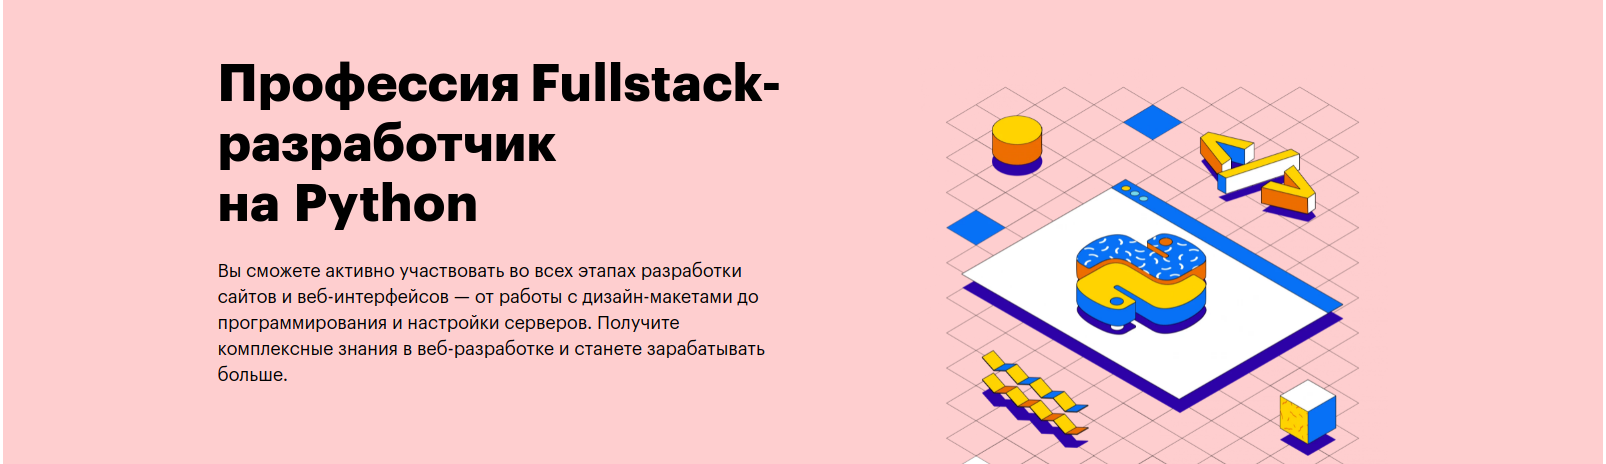 Профессия Fullstack-разработчик на Python от Skillbox